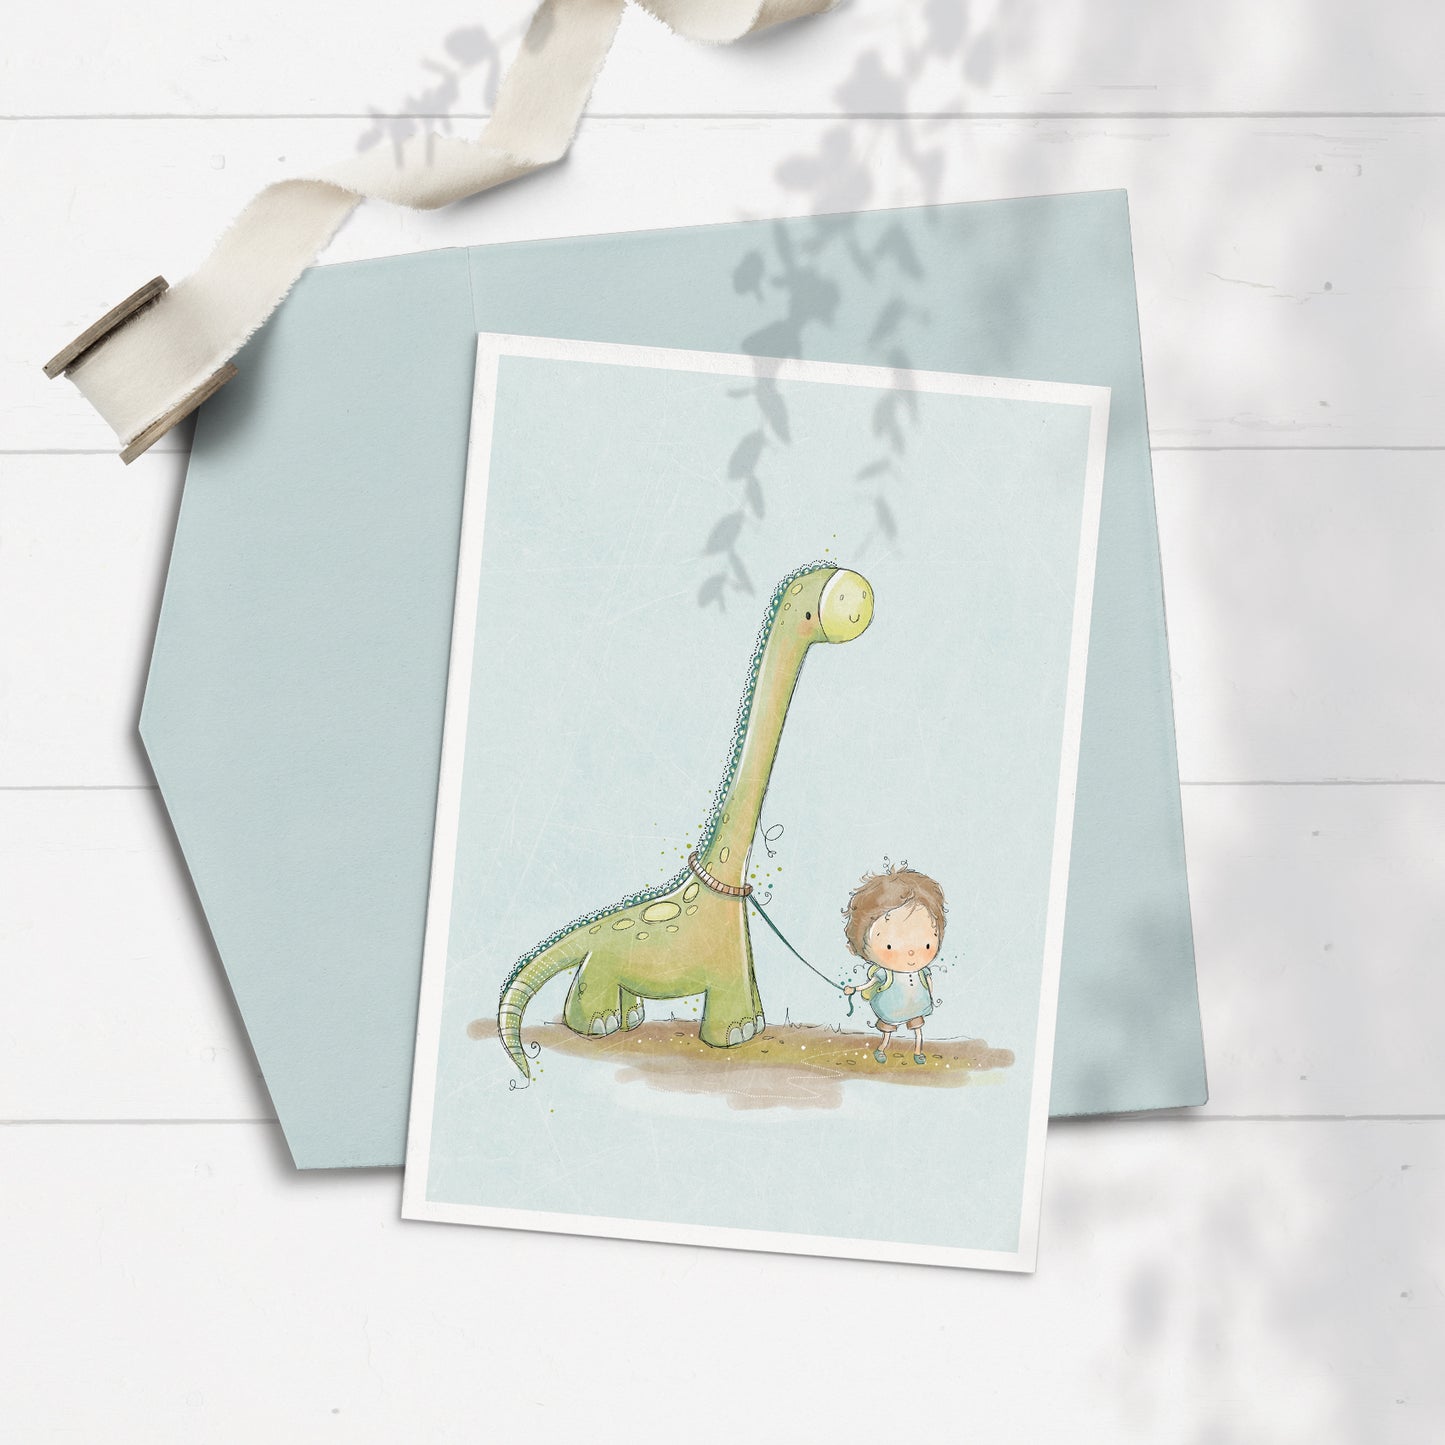 My Pet Dinosaur 5x7 Greeting Card